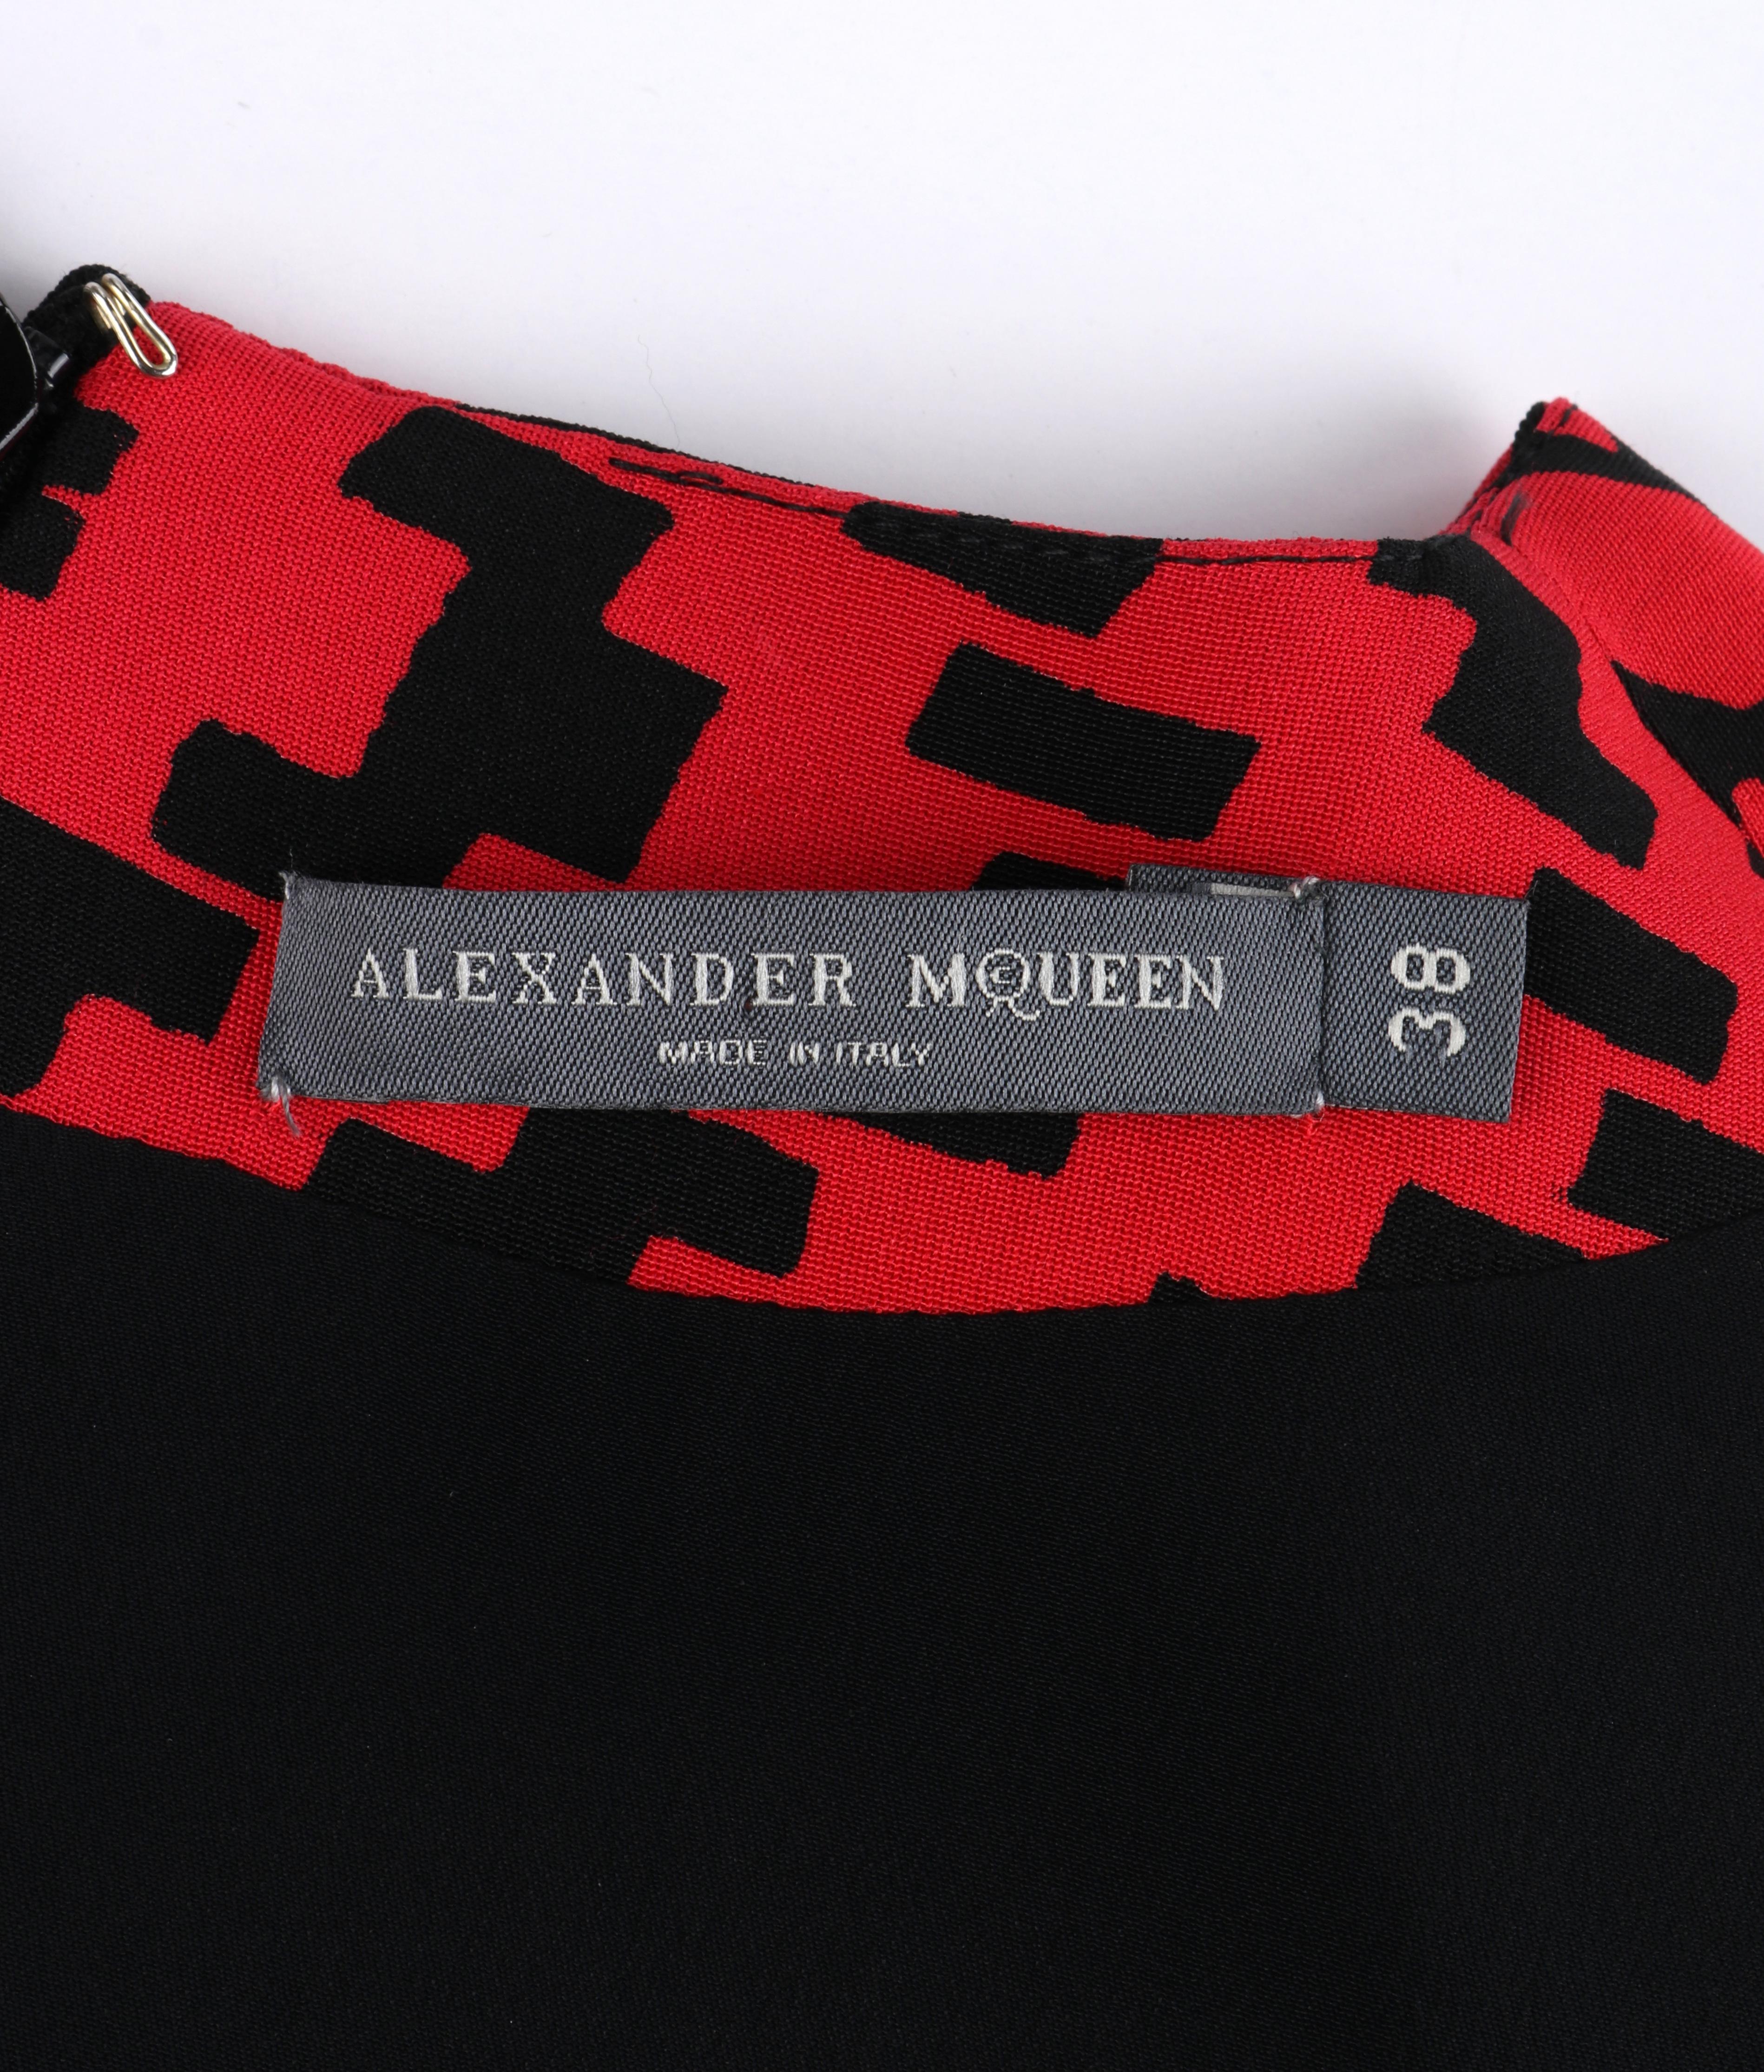 ALEXANDER McQUEEN S/S 2014 Red Black Mosaic Shape Print Fit N Flare Skater Dress 2